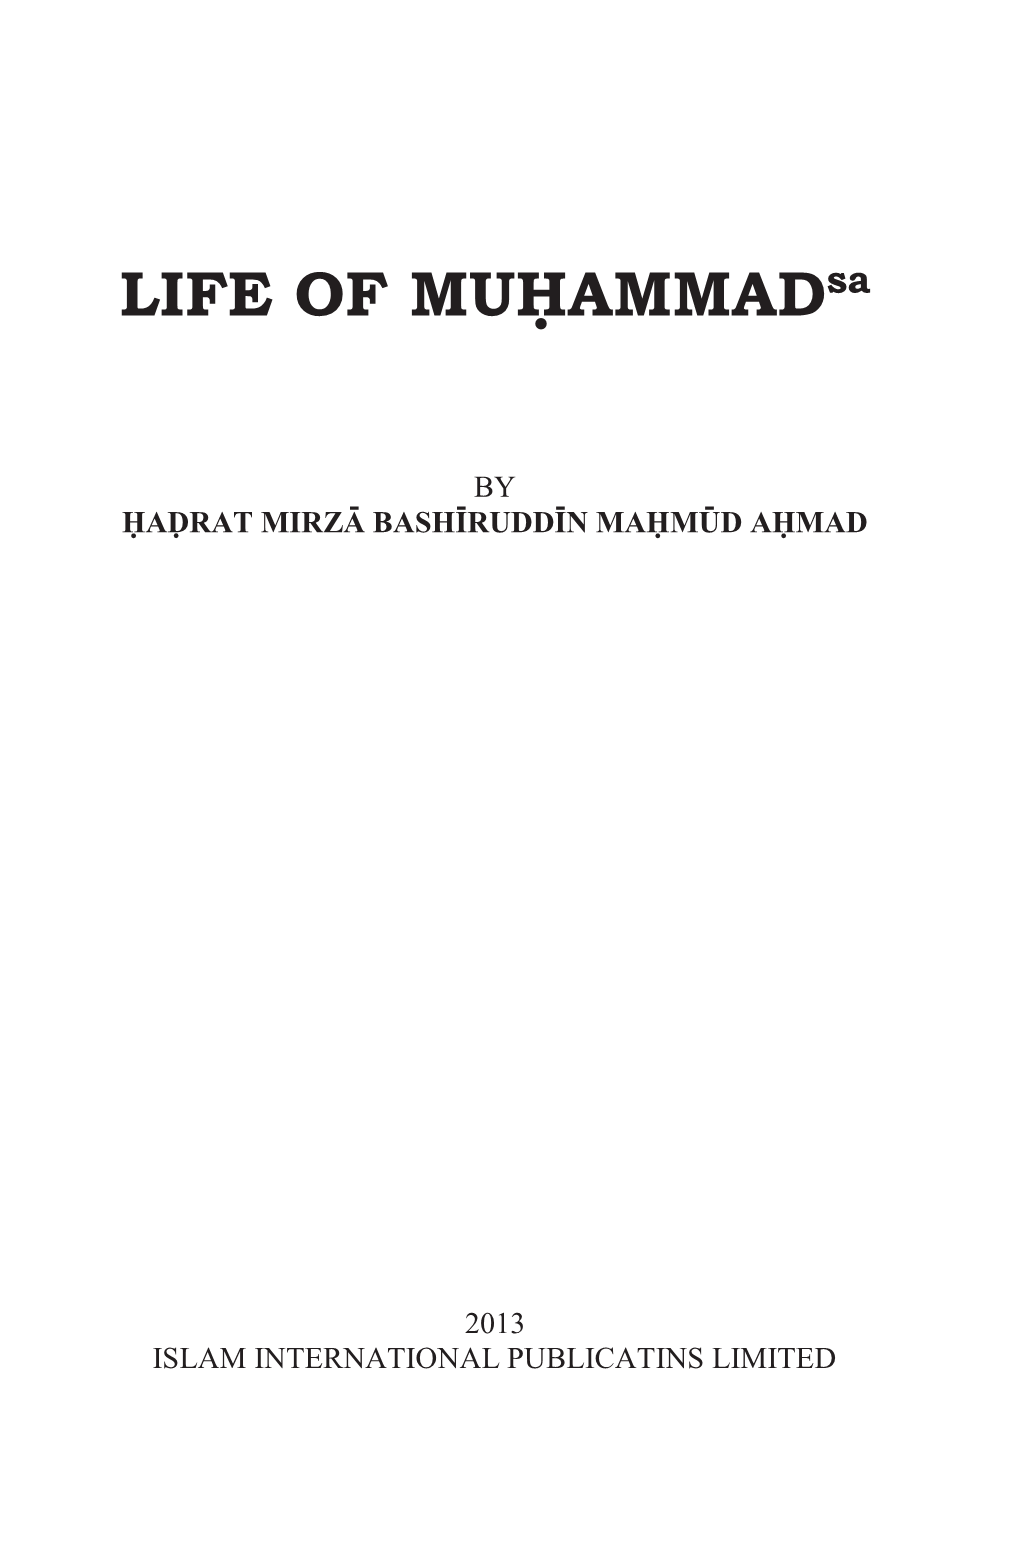 LIFE of Muhammadsa